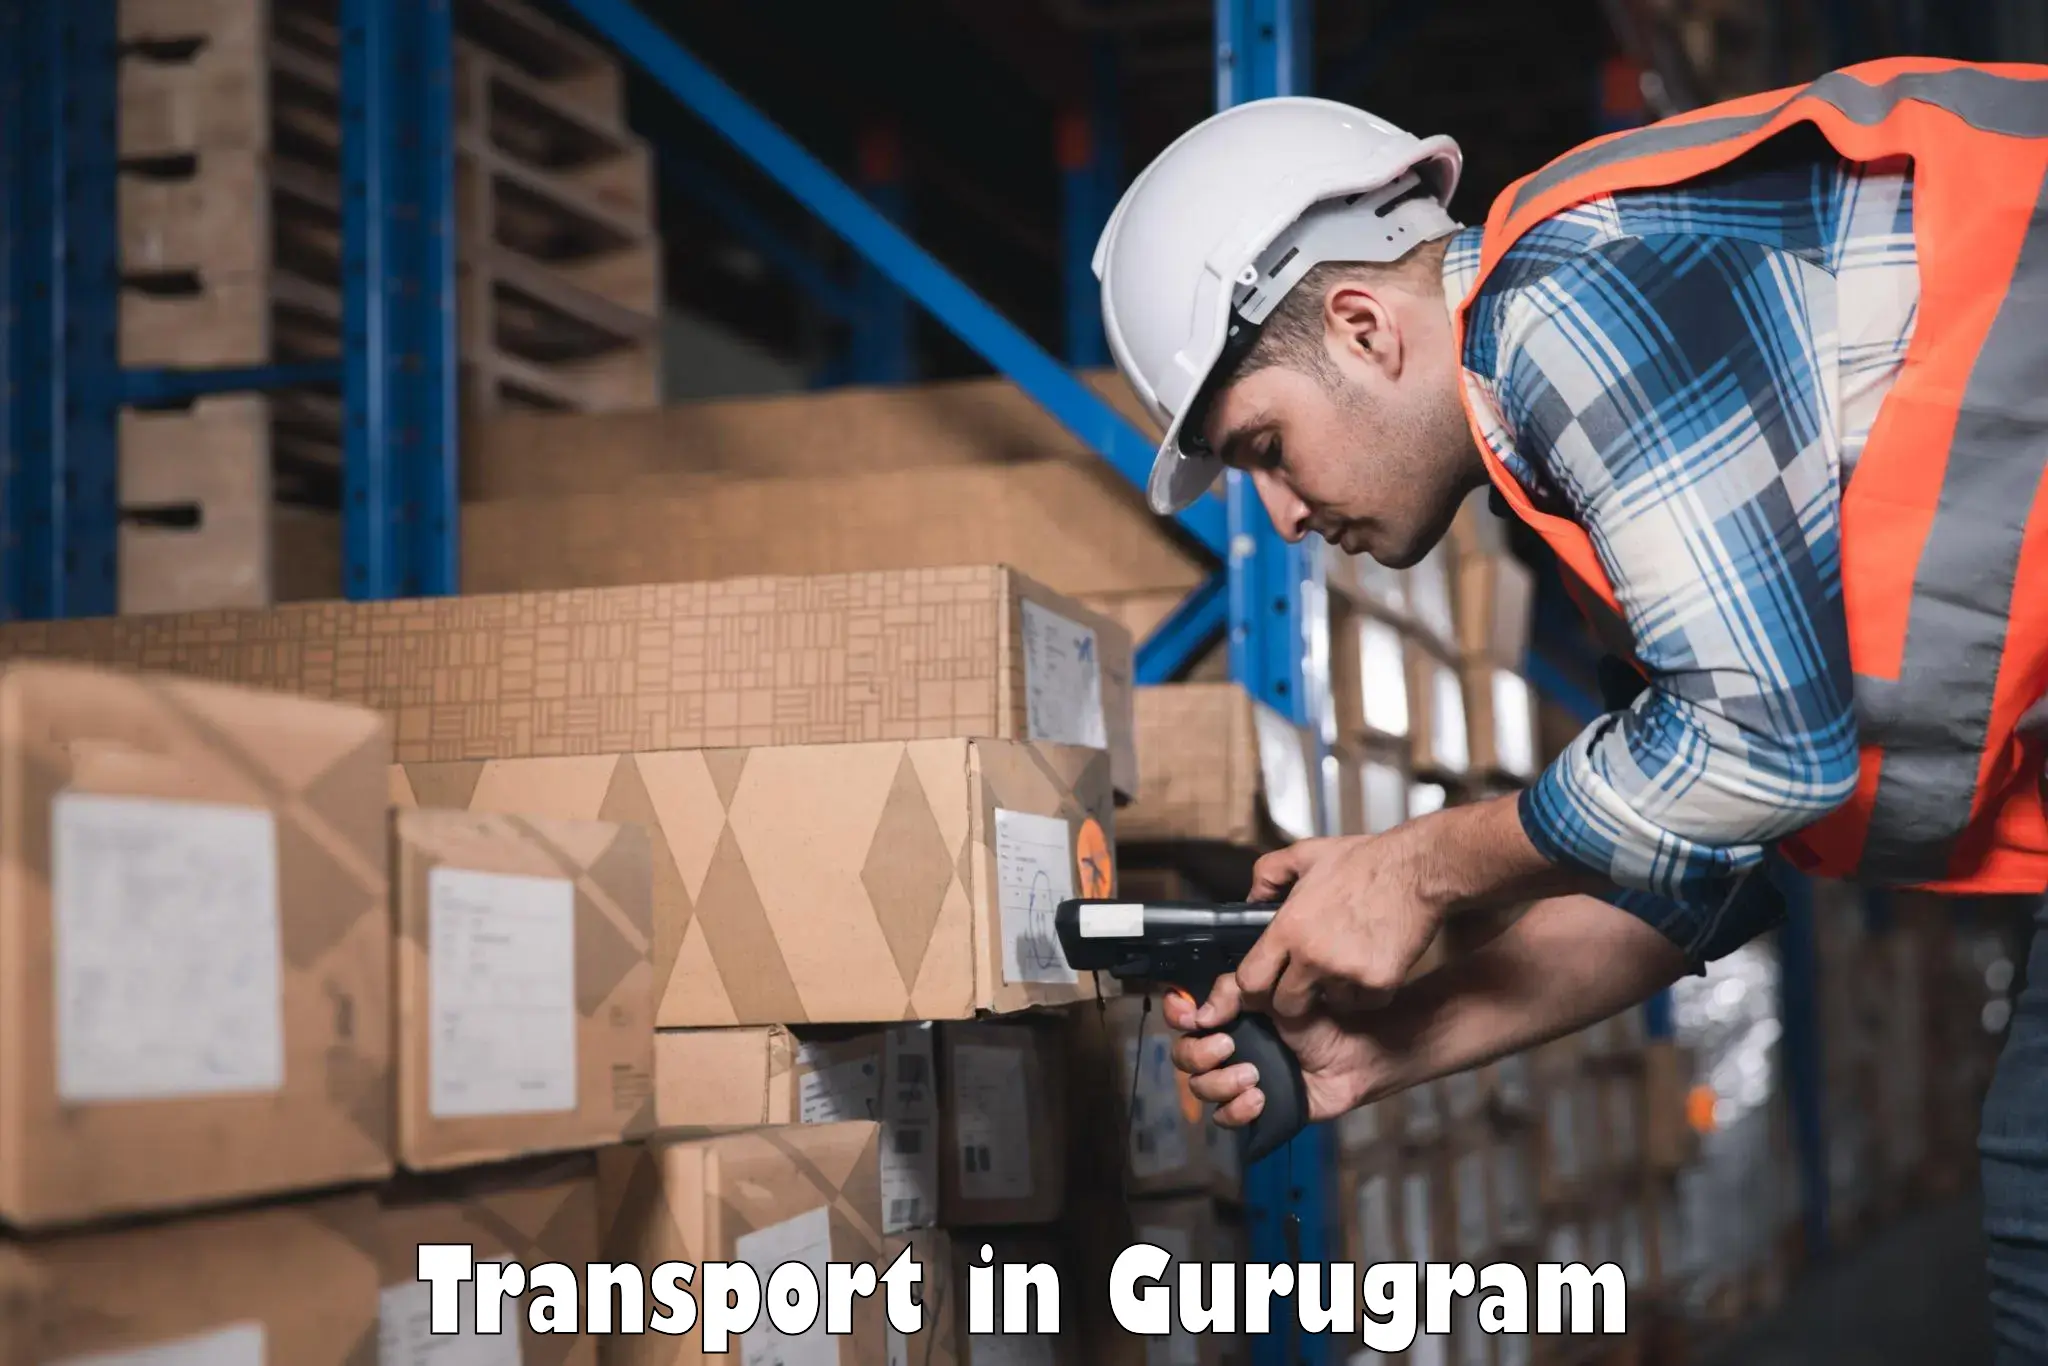 Transportation services in Gurugram